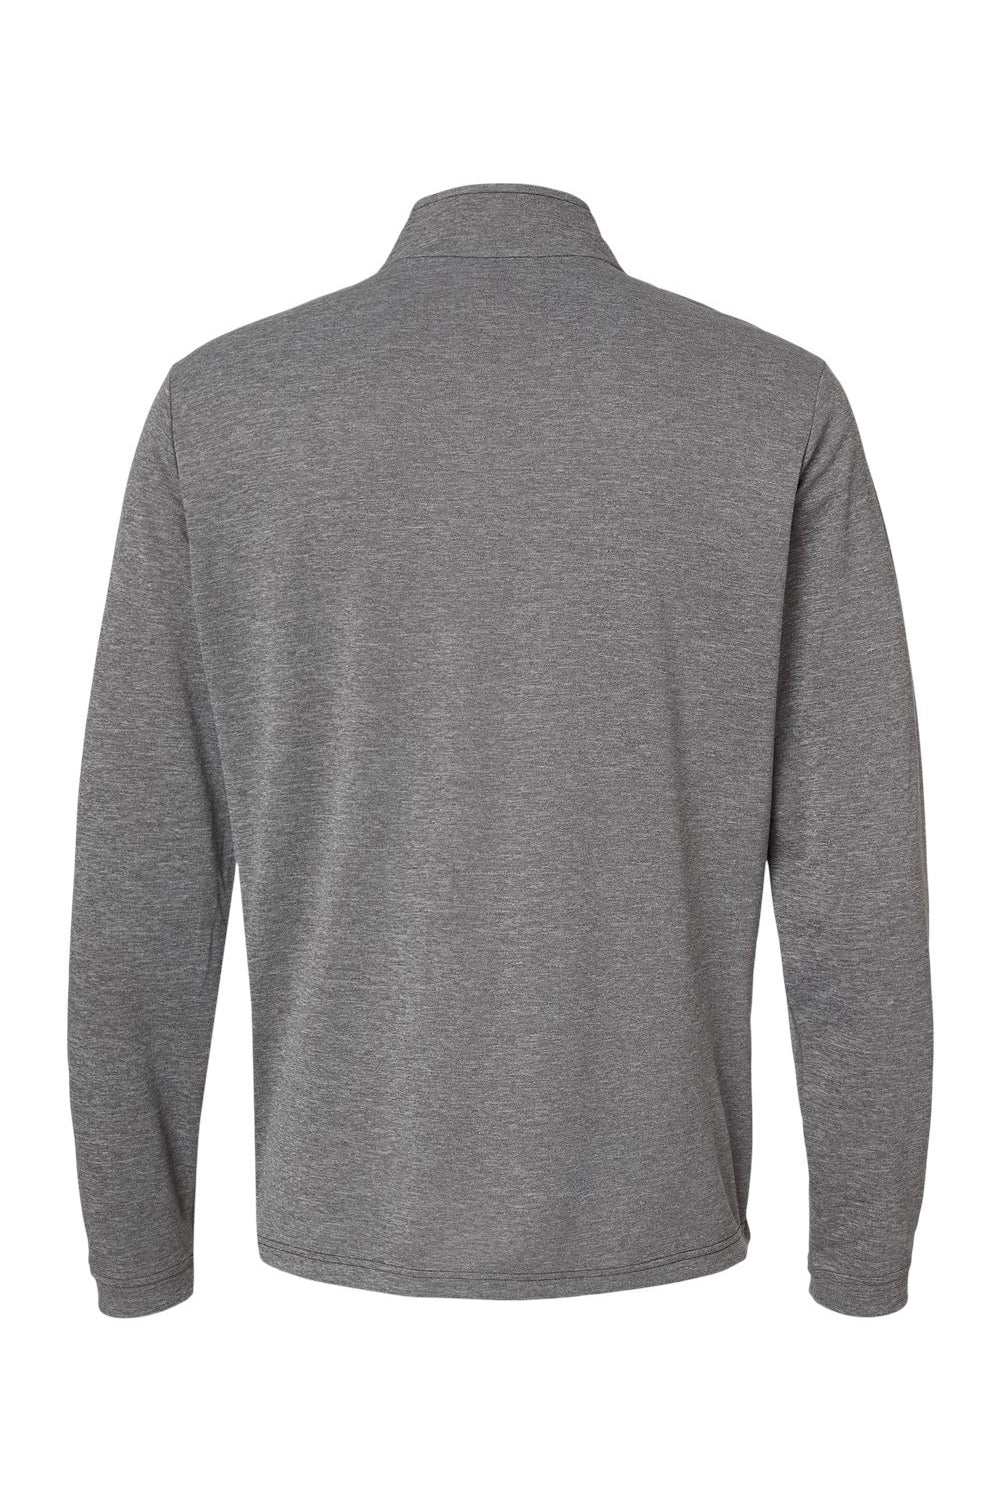 Adidas A401 Mens UPF 50+ 1/4 Zip Sweatshirt Heather Black Flat Back